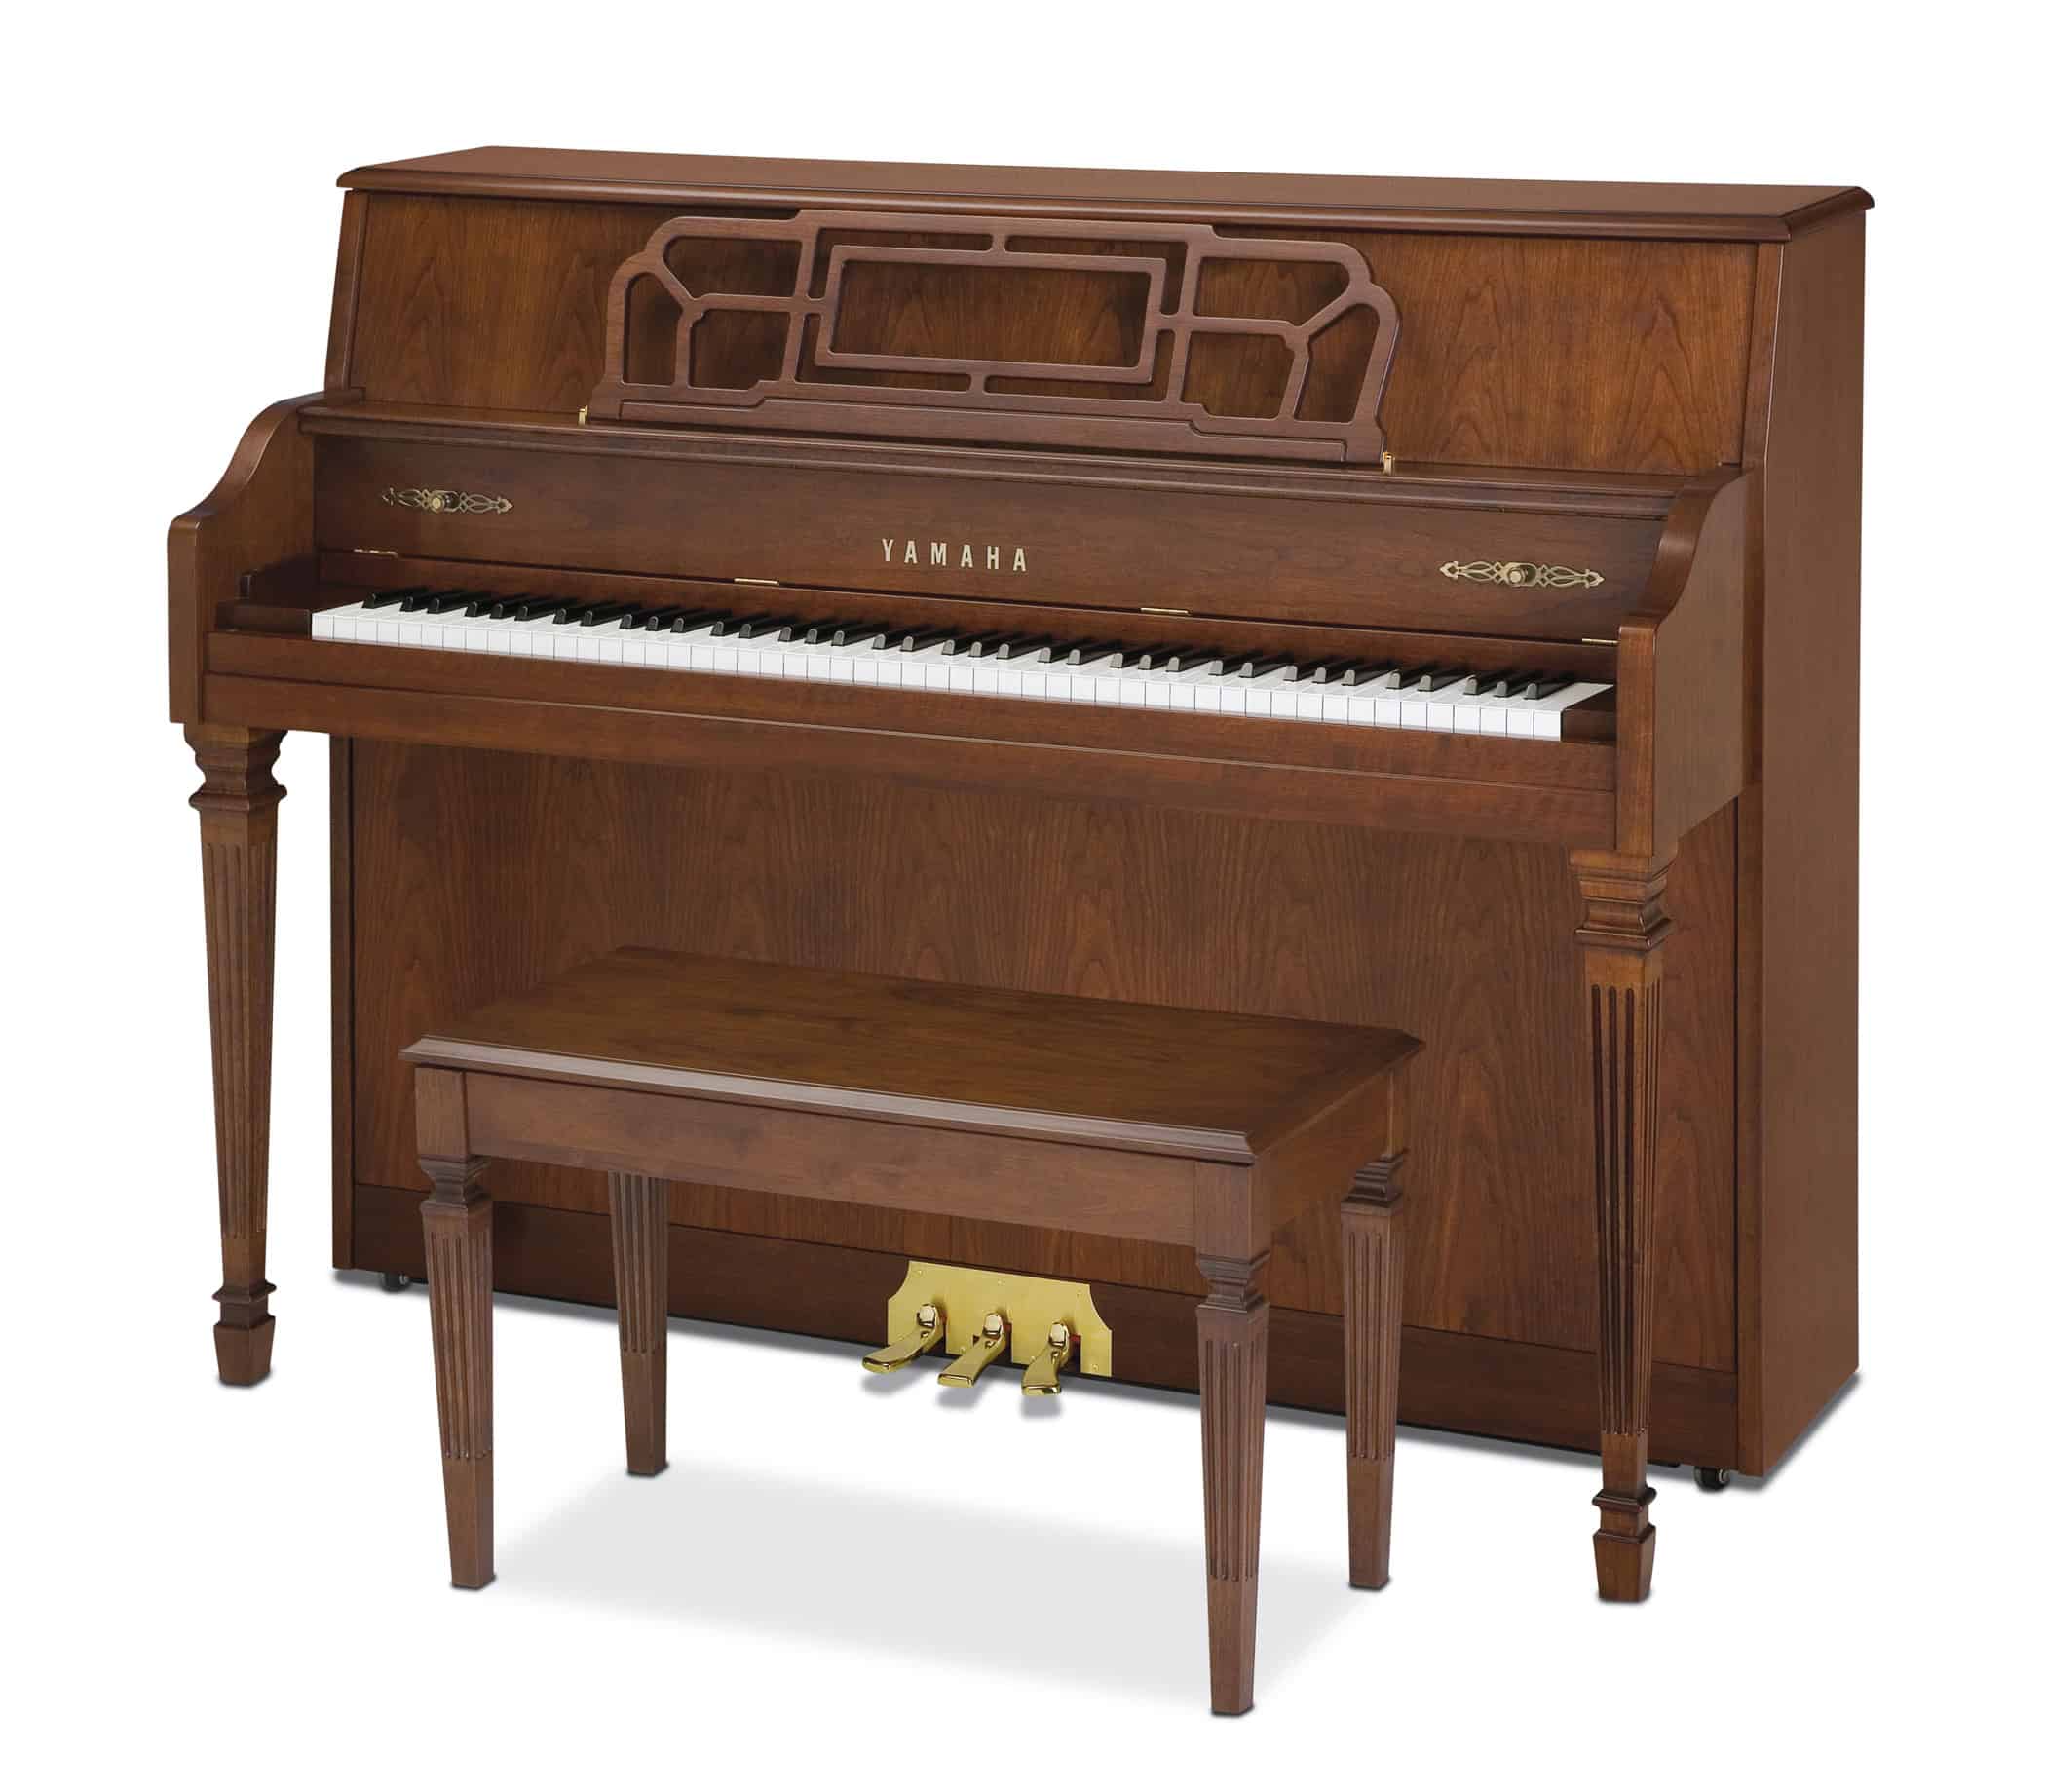 M560 upright piano in Hancock brown